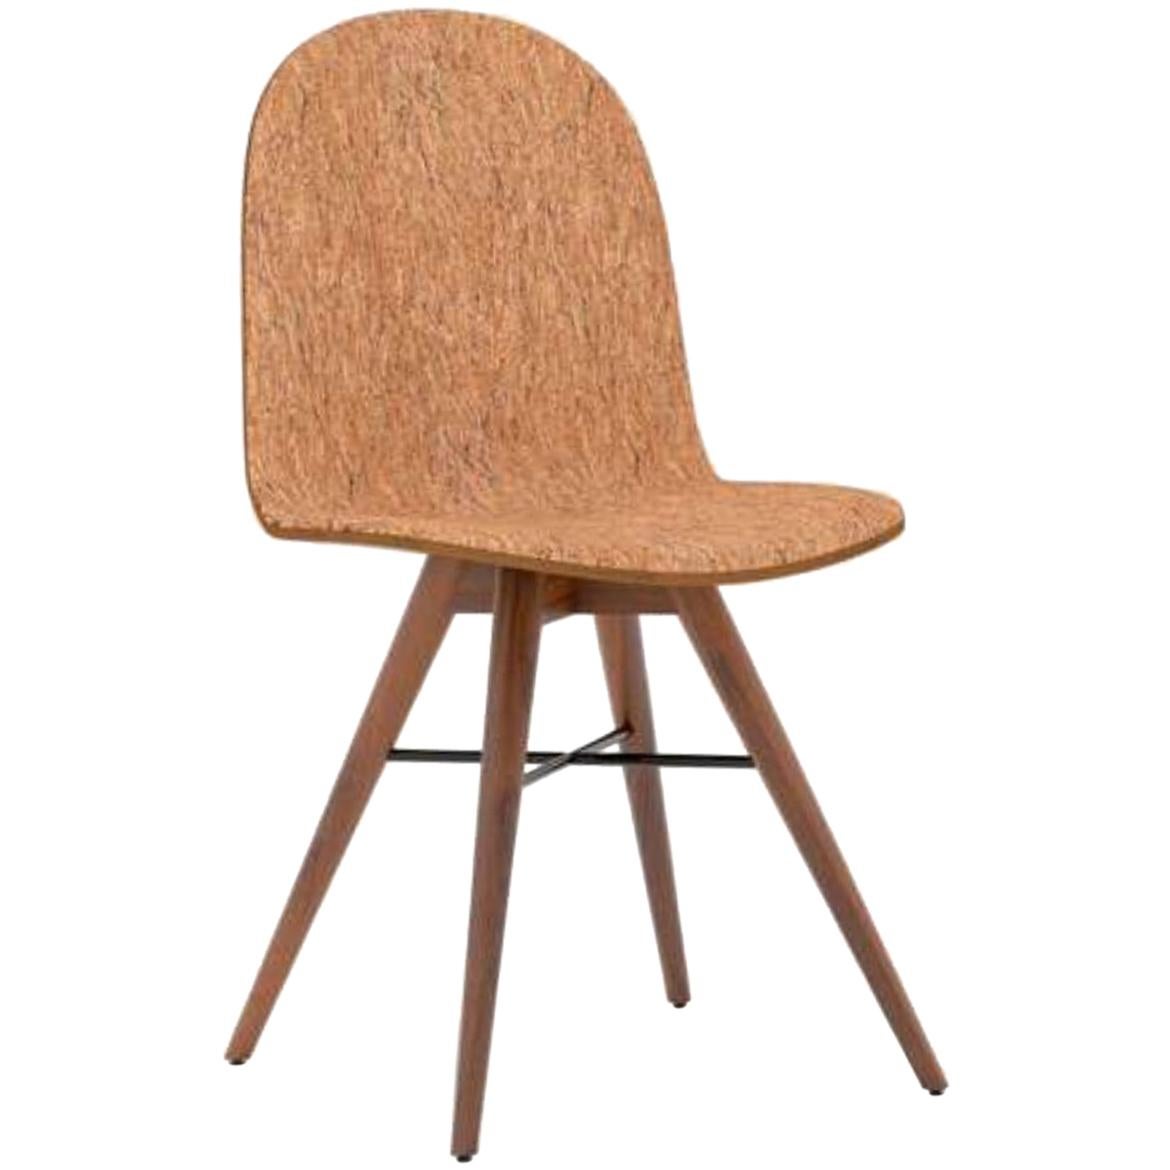 Walnut and Corkfabric Contemporary Chair by Alexandre Caldas